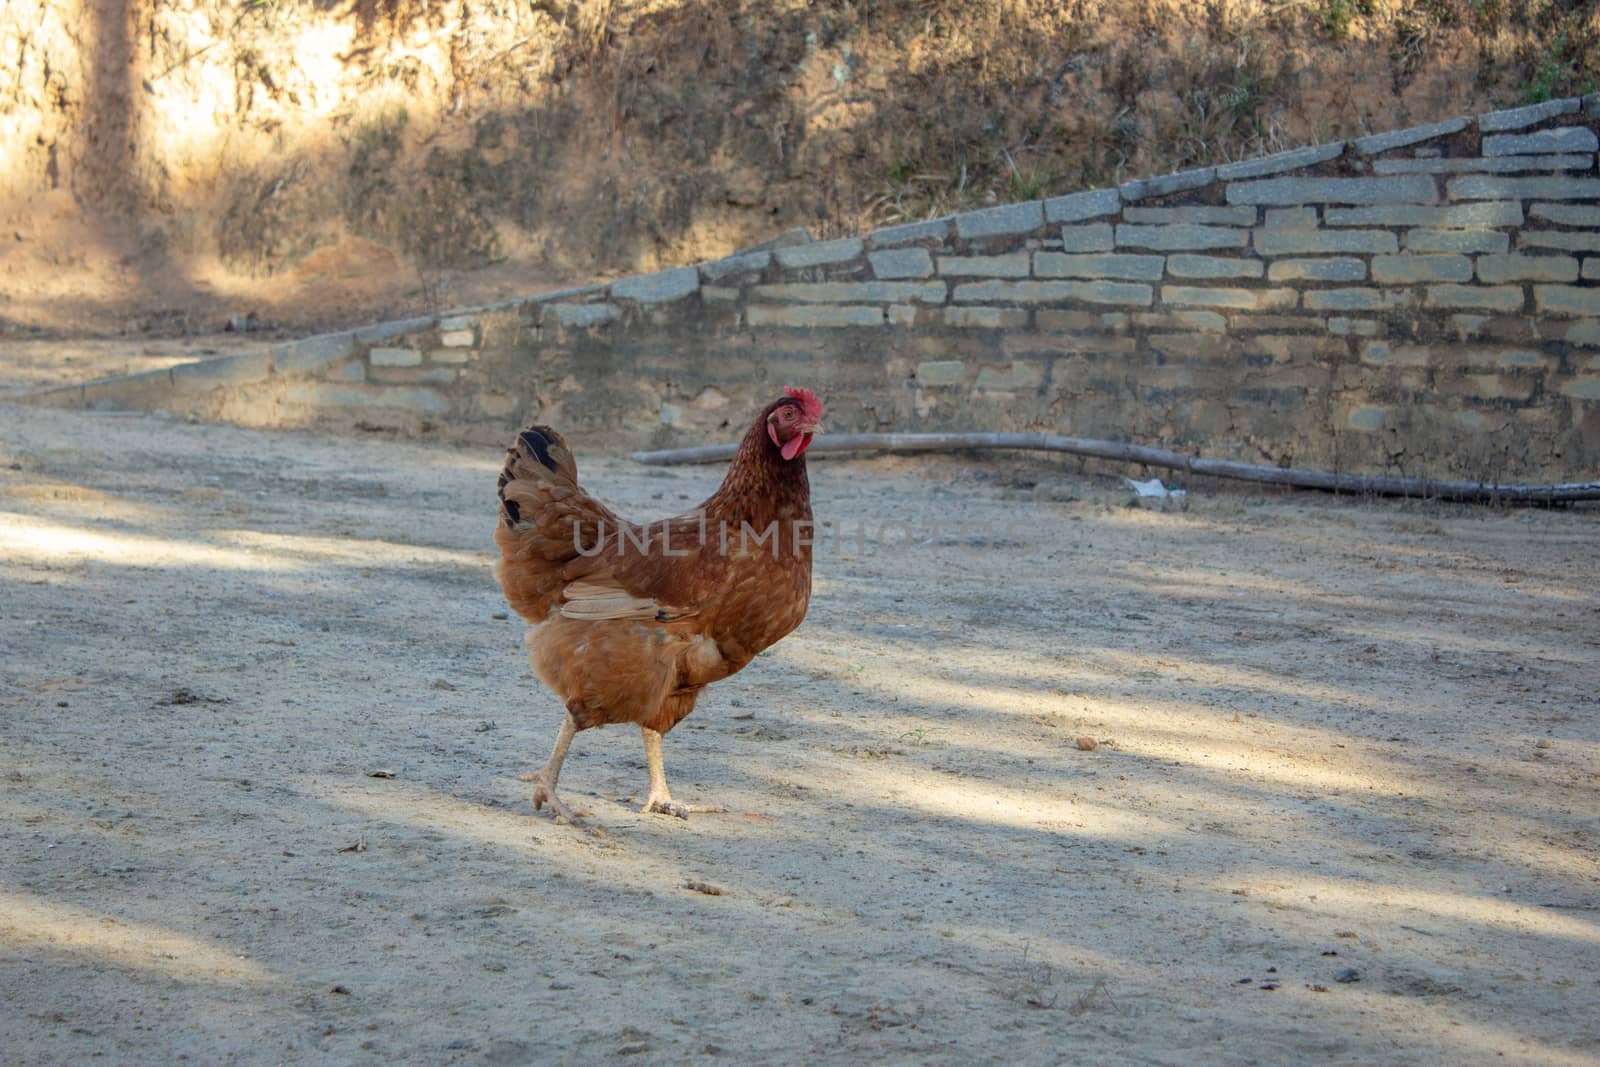 A single chicken hem walking around on a farm